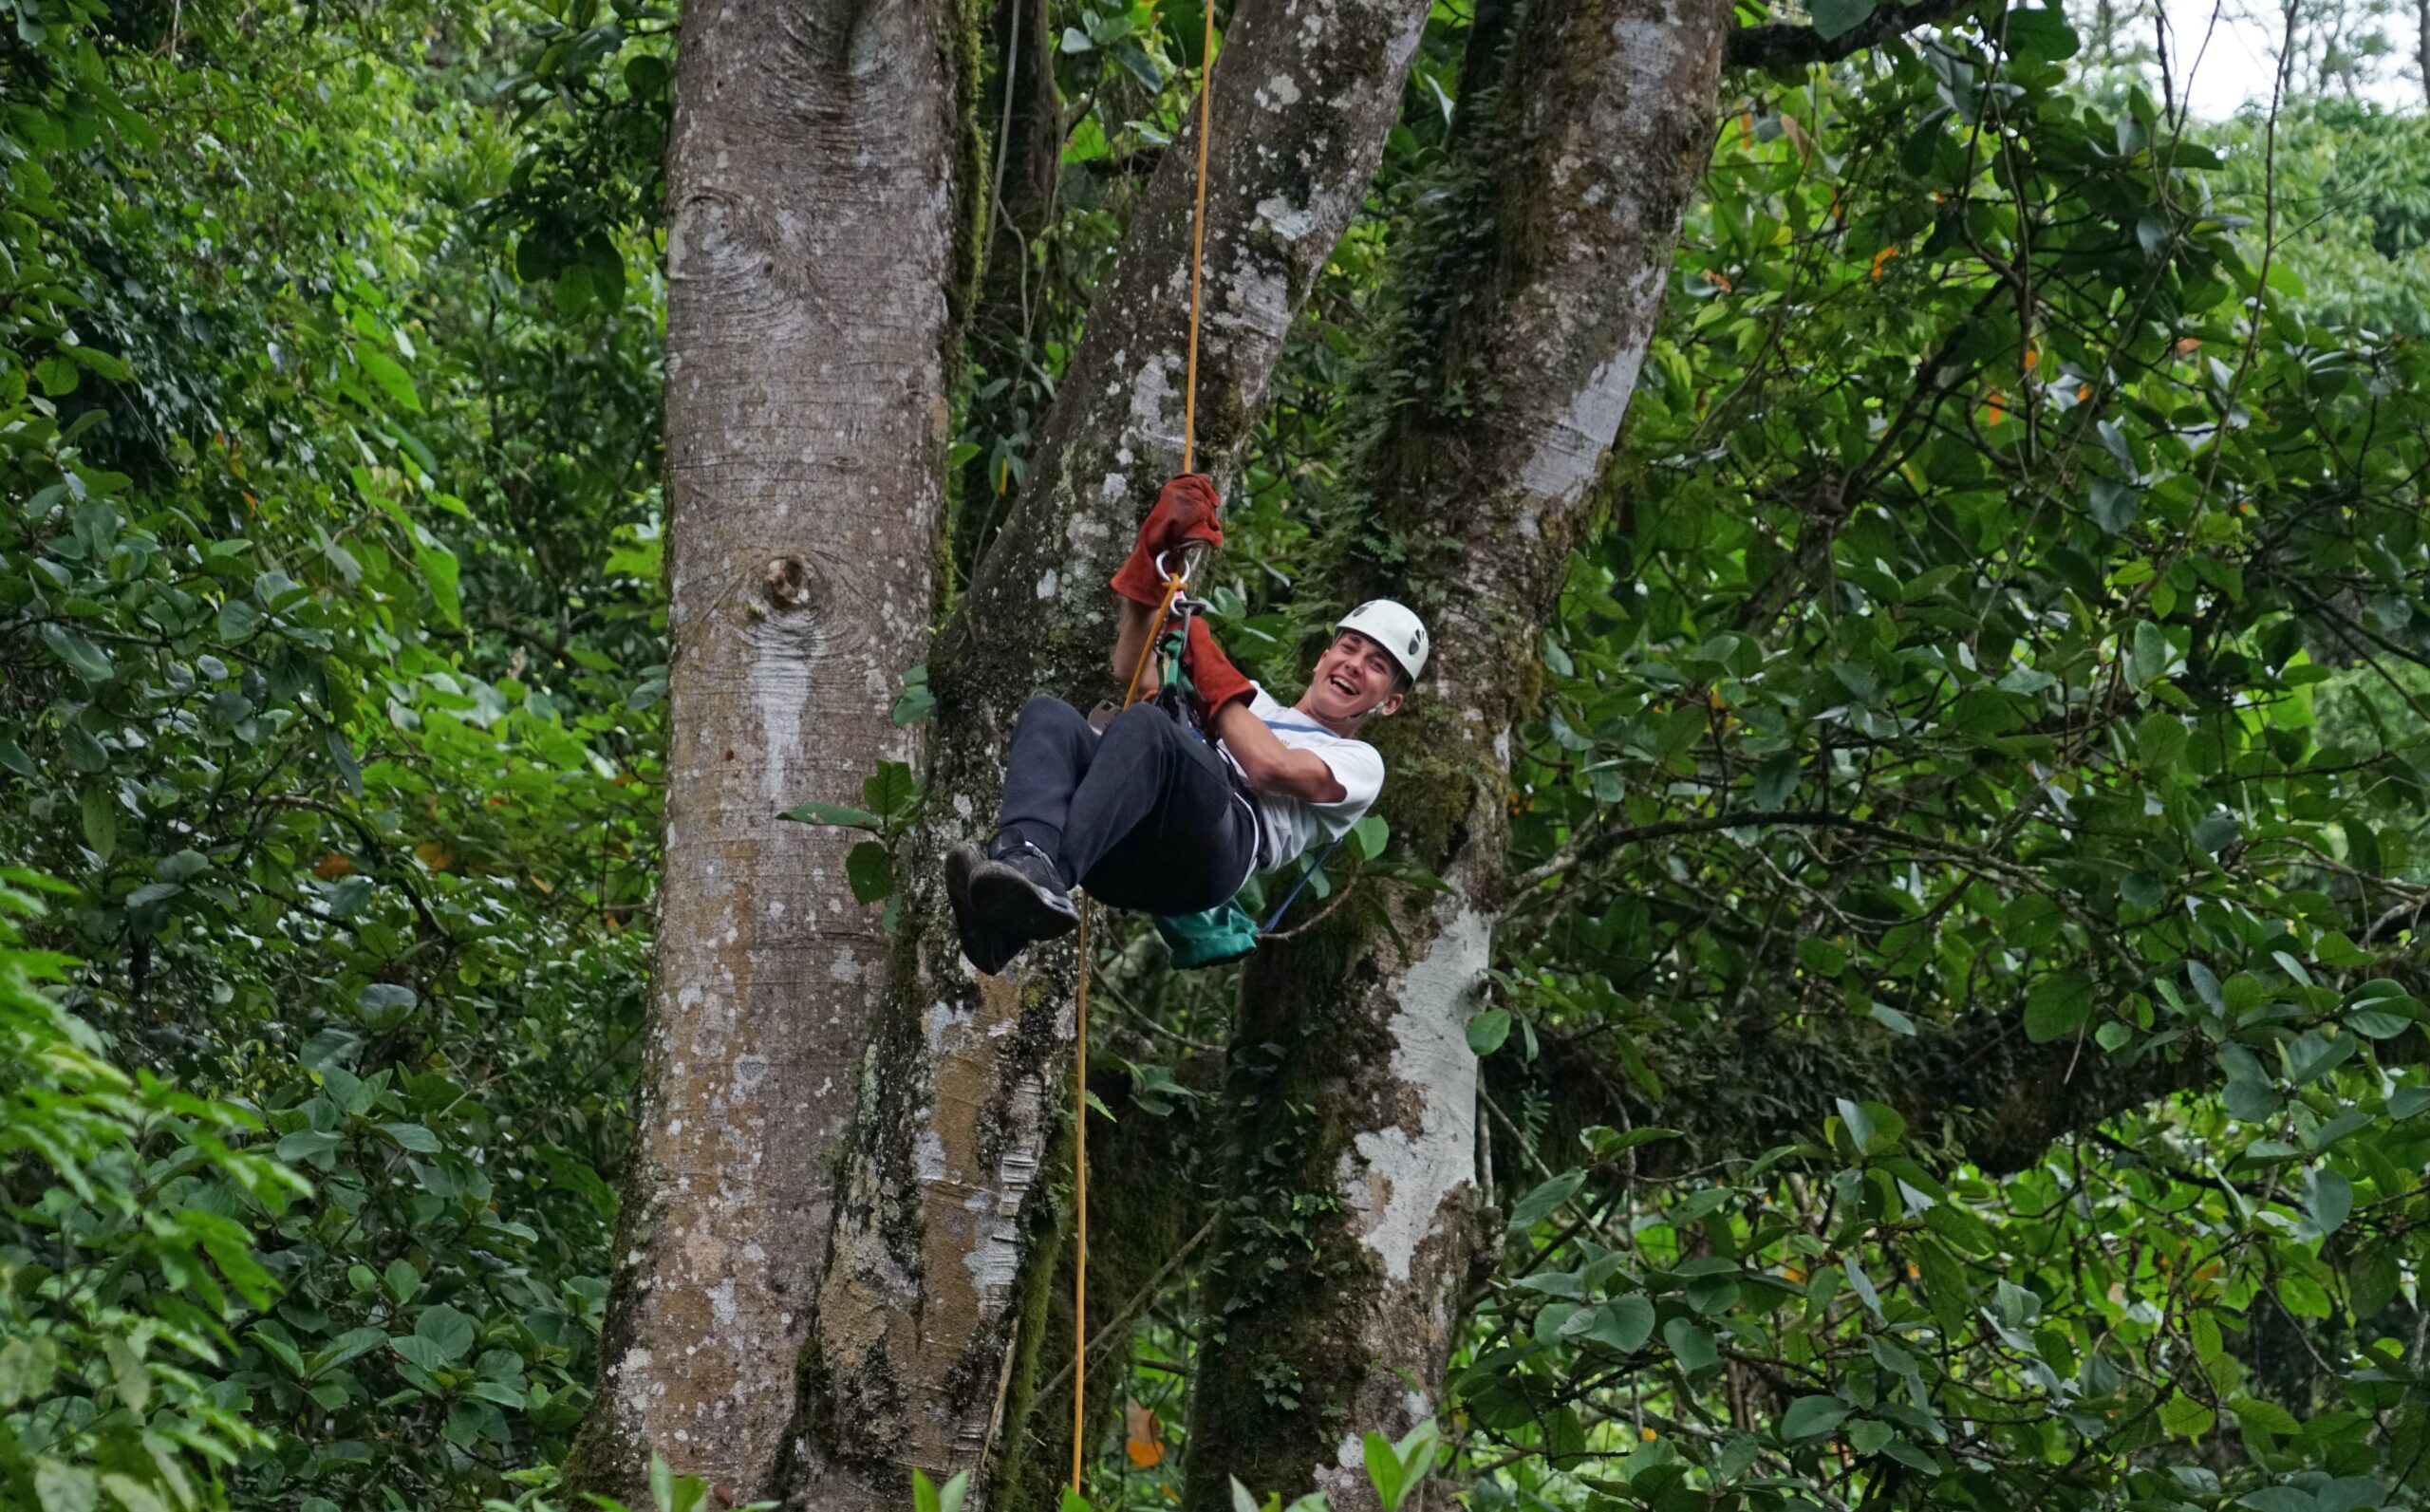 man swinging on zipline course through jungle